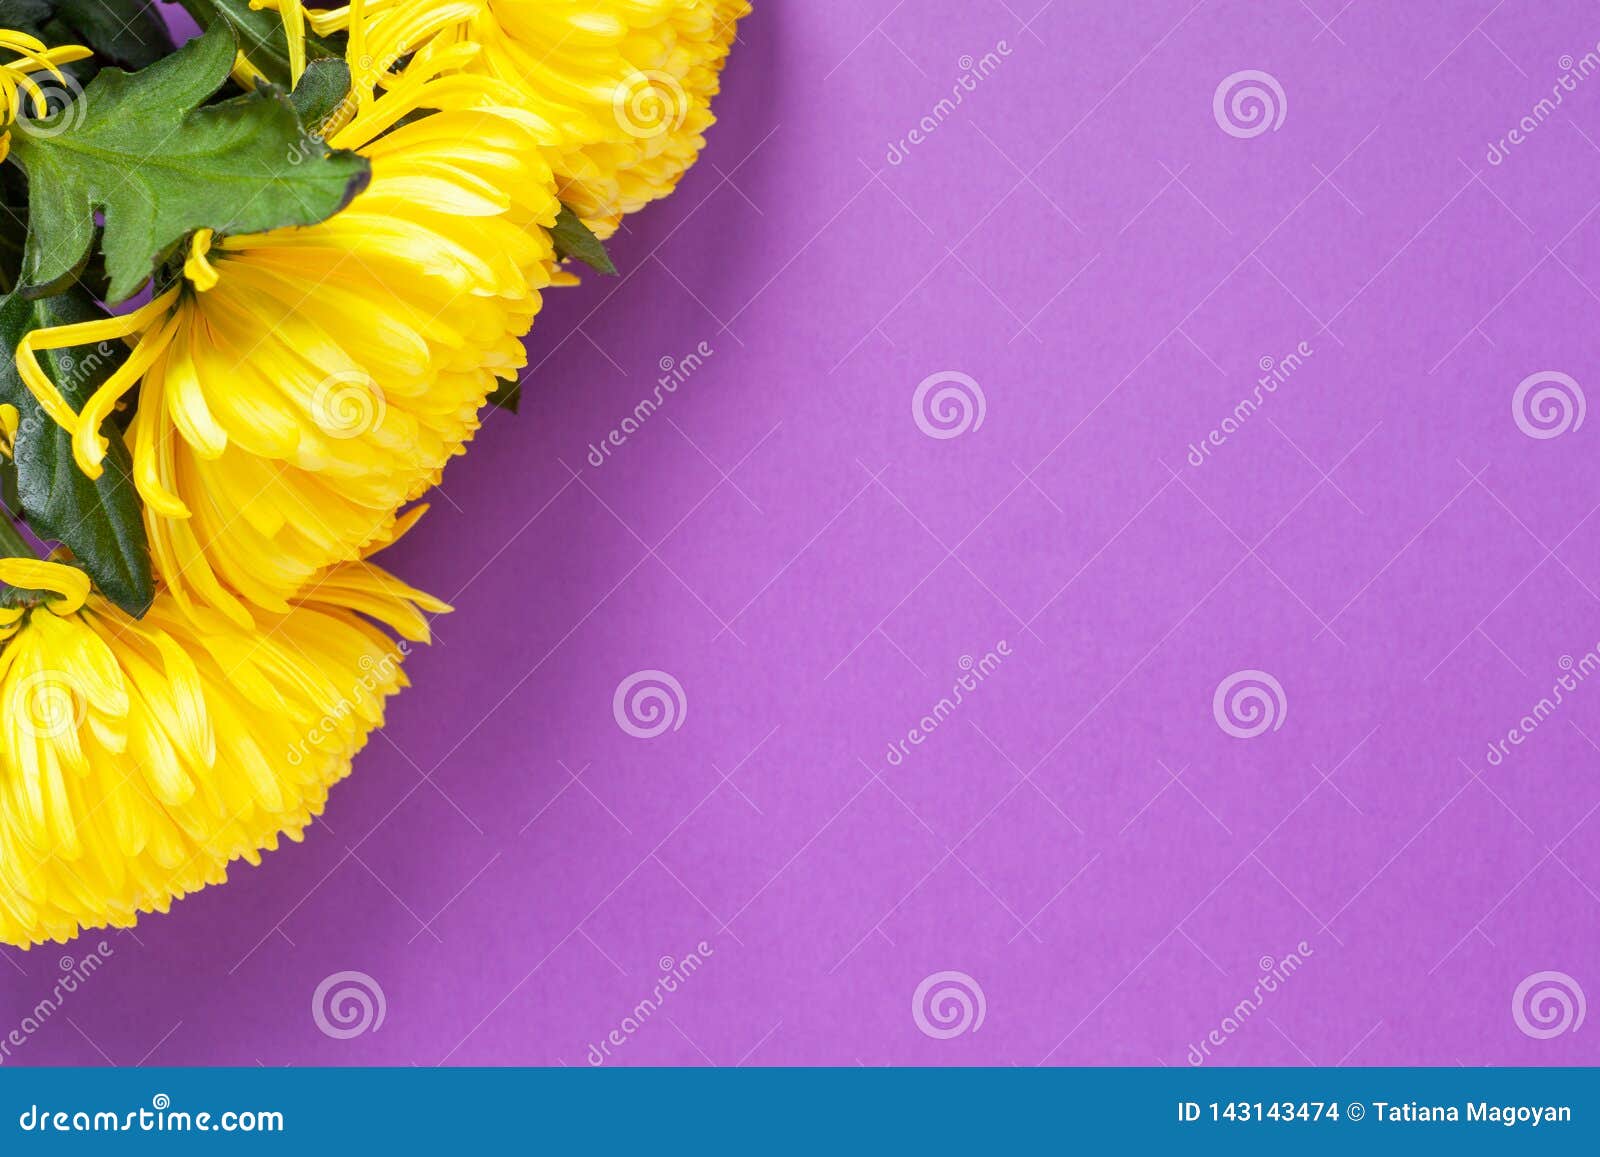 Bright Yellow Chrysanthemums On Purple Background. Flat Lay. Horizontal ...